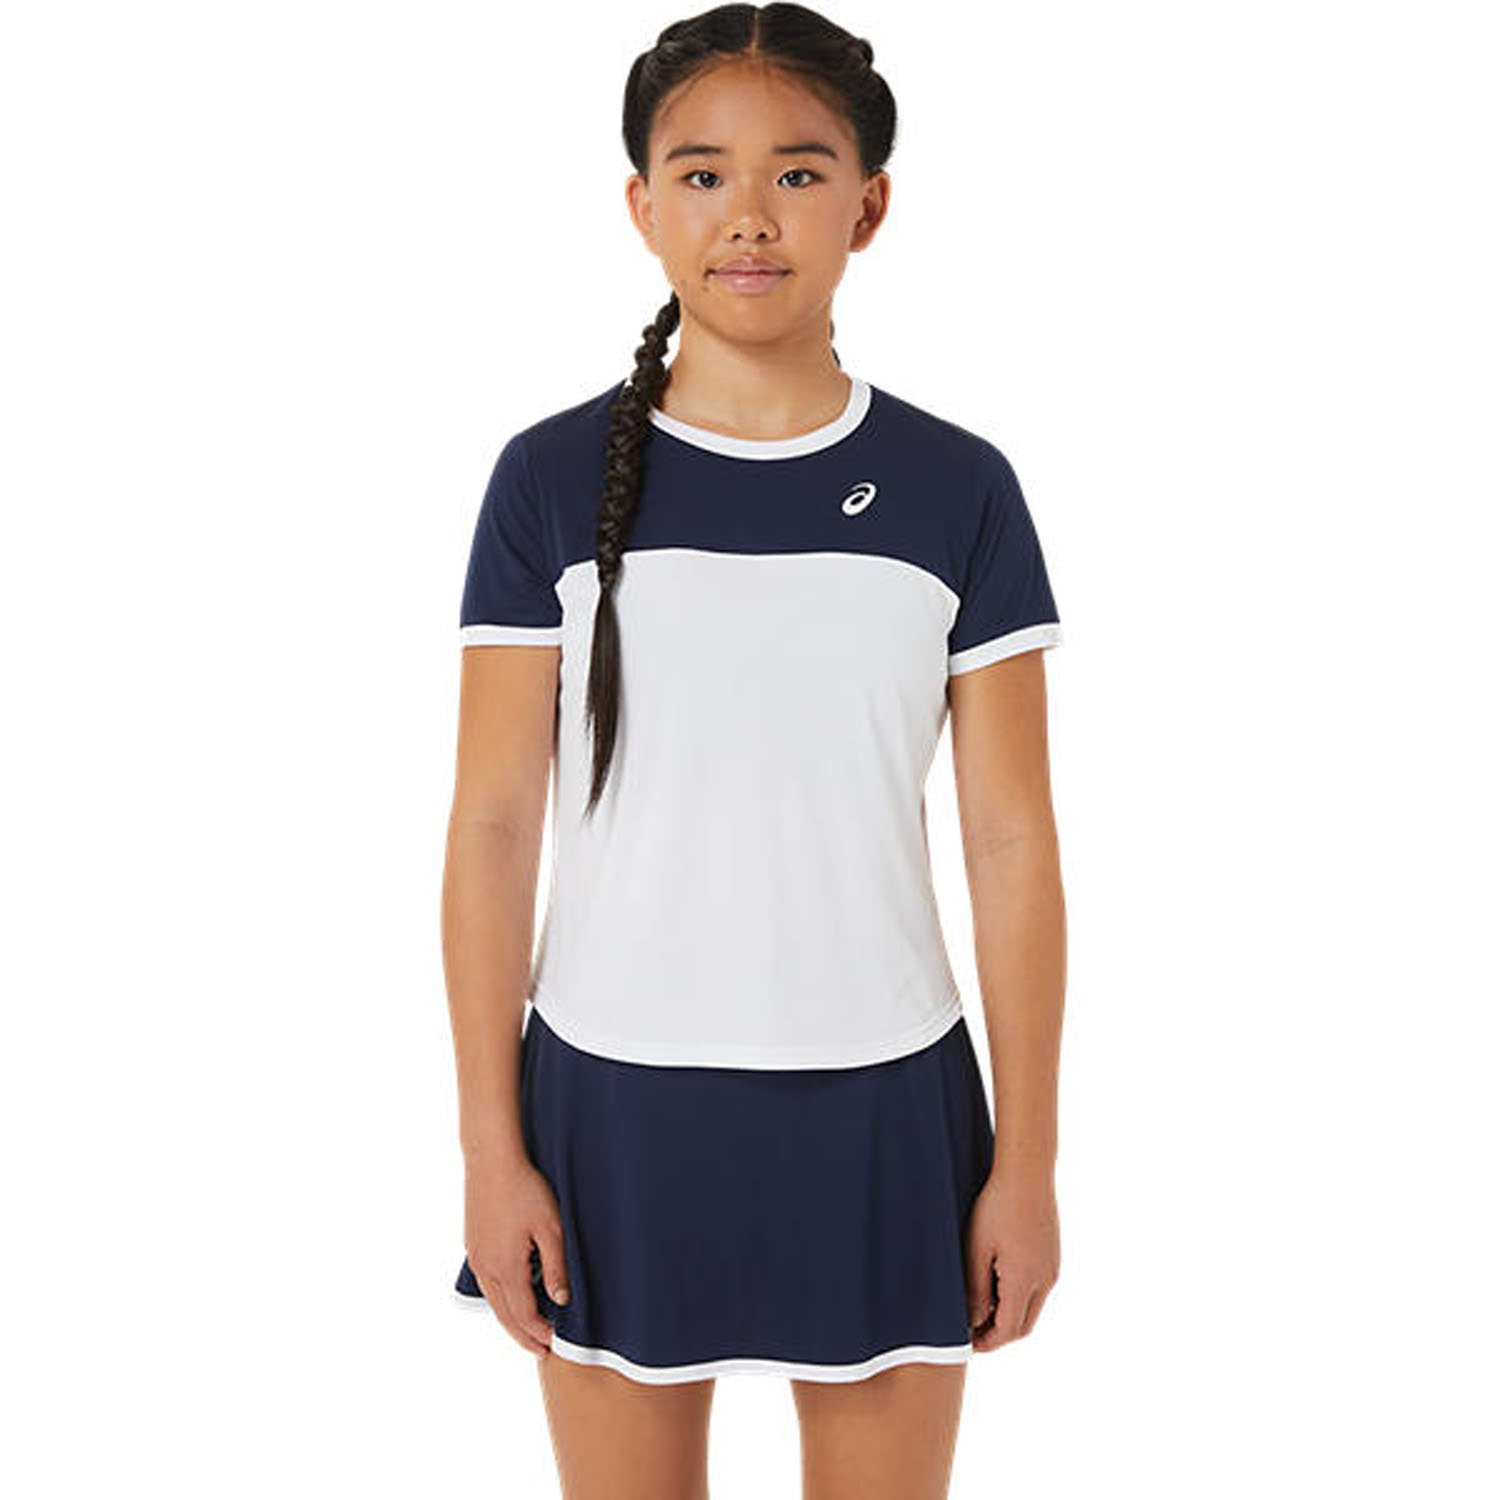 Asics Girls Çocuk Tenis Tişört - Renkli - 1